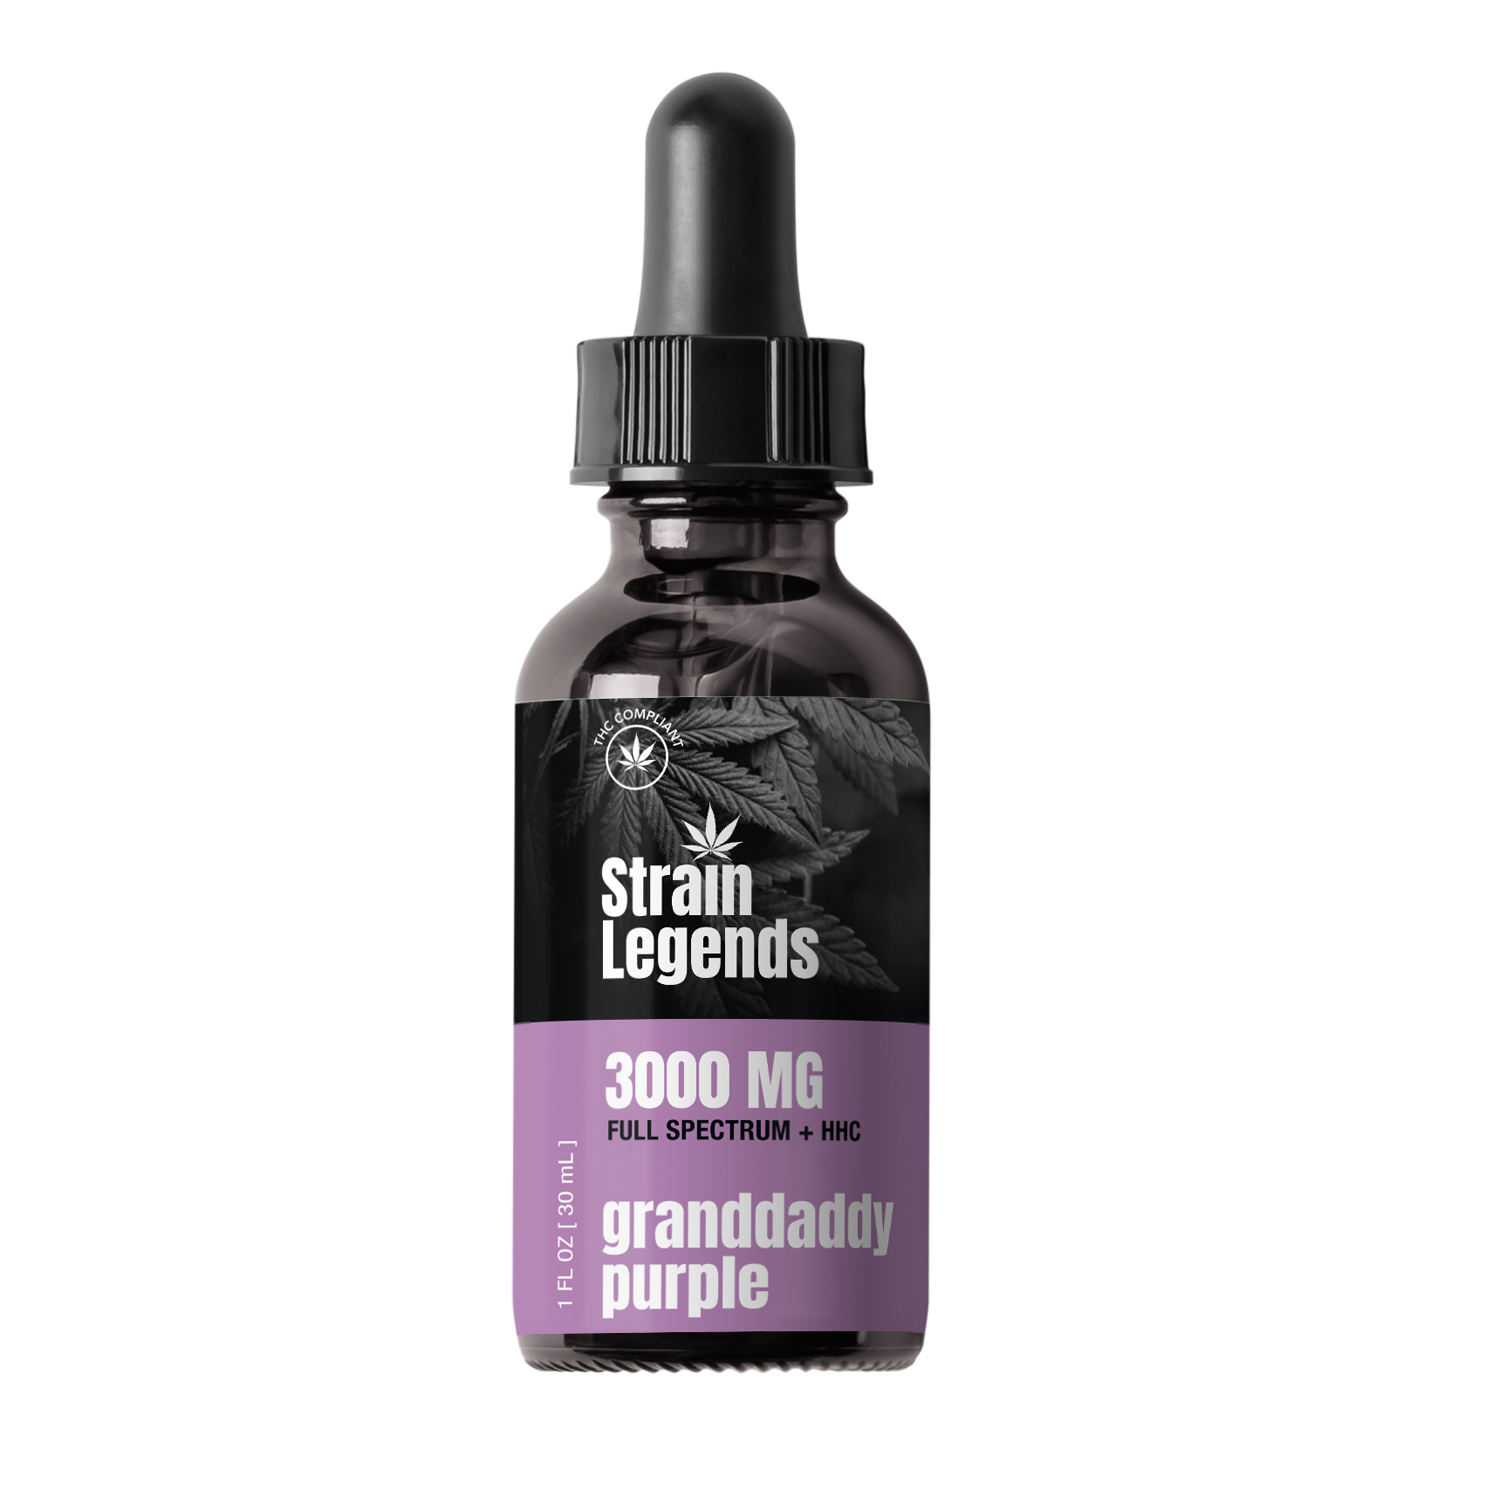 Strain Legends 3000 mg Full Spectrum + HHC Tincture, Granddaddy Purple